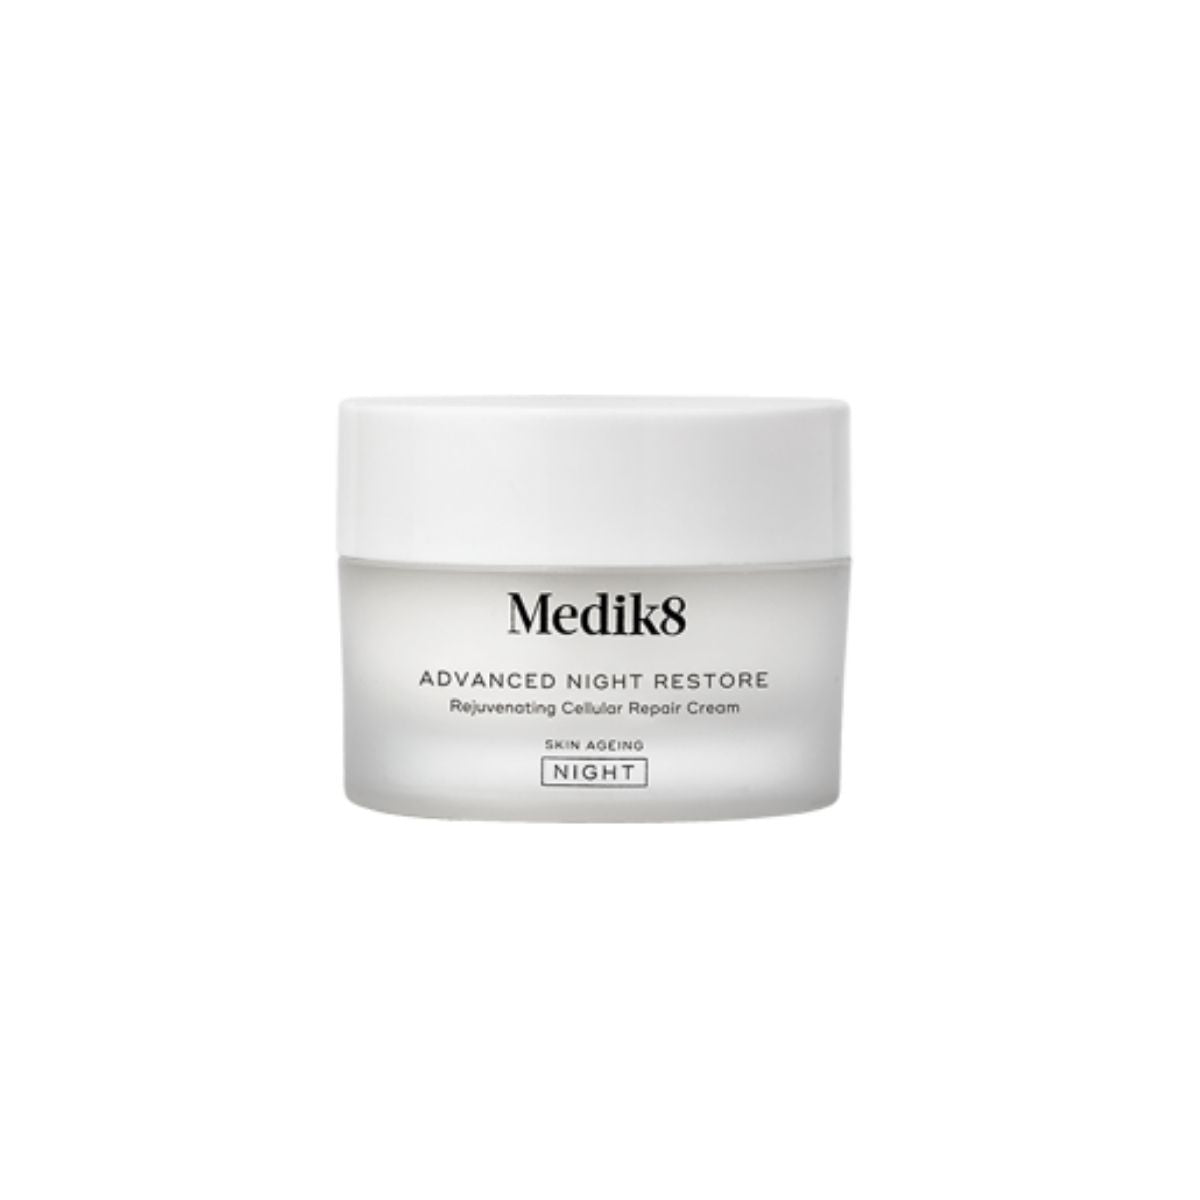 Medik8 Advanced Night Restore Cream